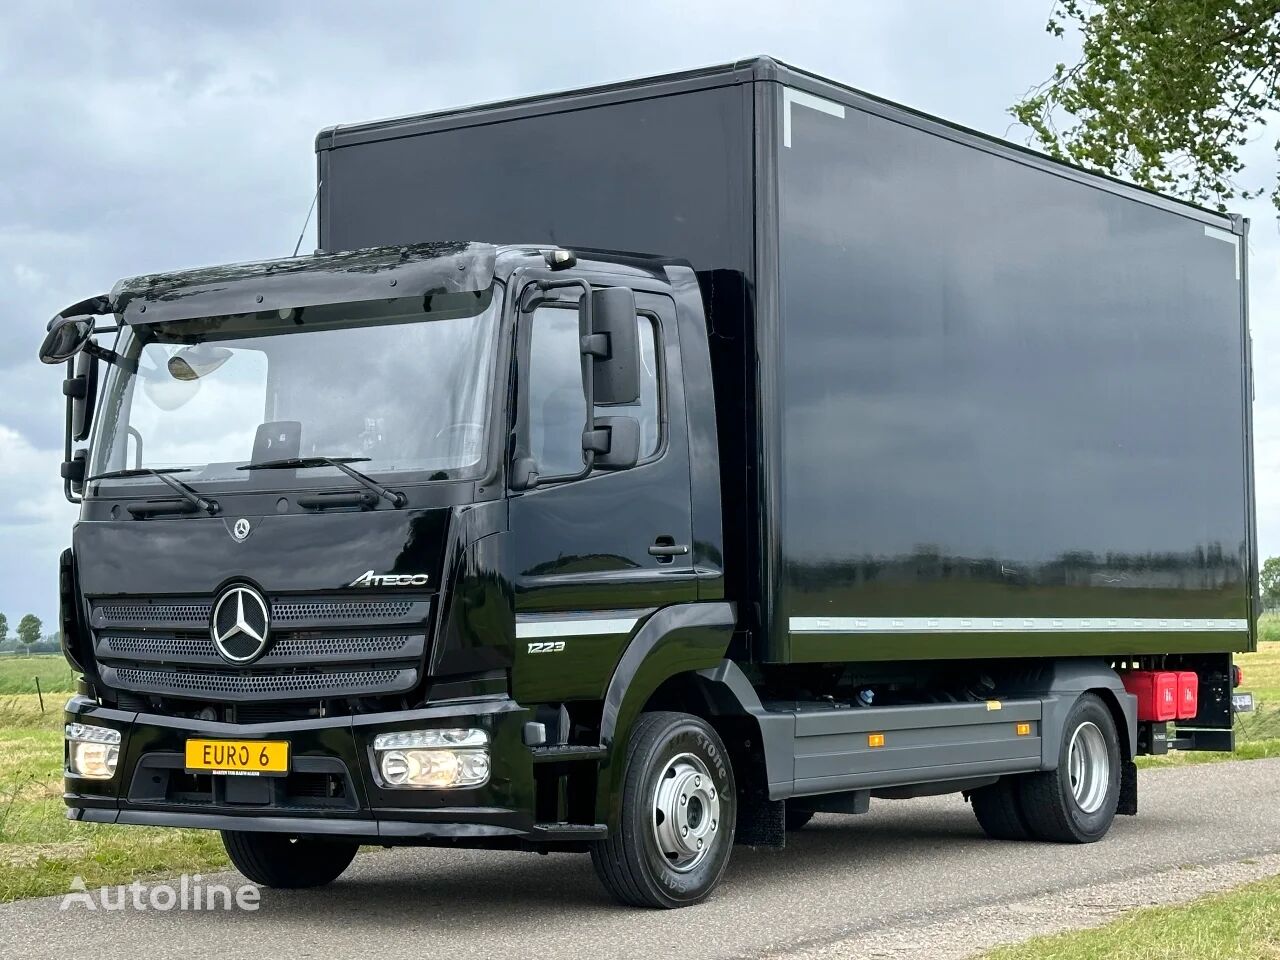 Mercedes-Benz Atego ATEGO1223L. EURO6.2020. 11990. 510x249x230. box truck